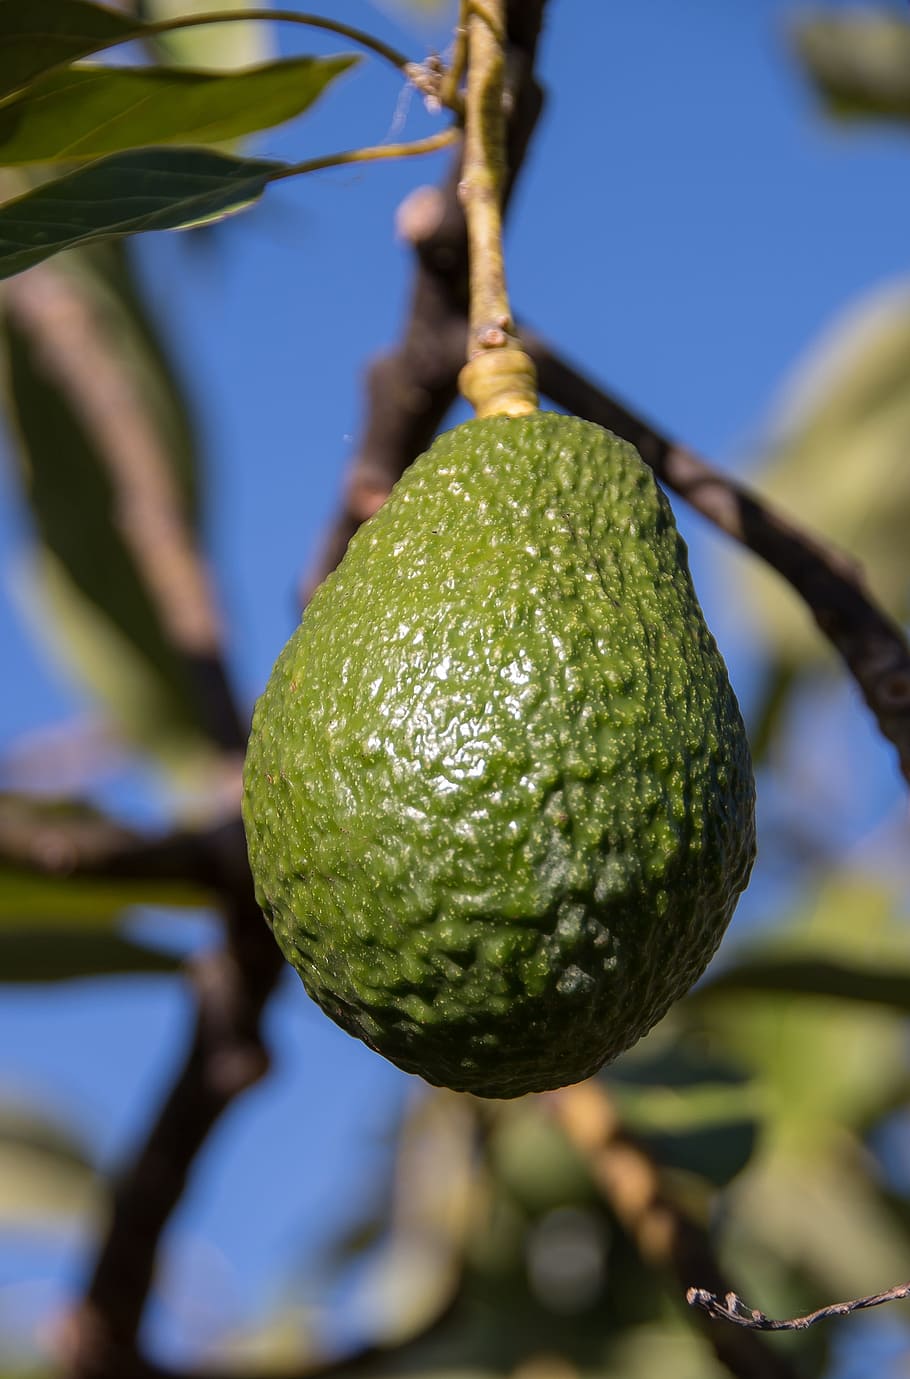 hass avocado, fruit, tree, green, growing, close-up, blue sky